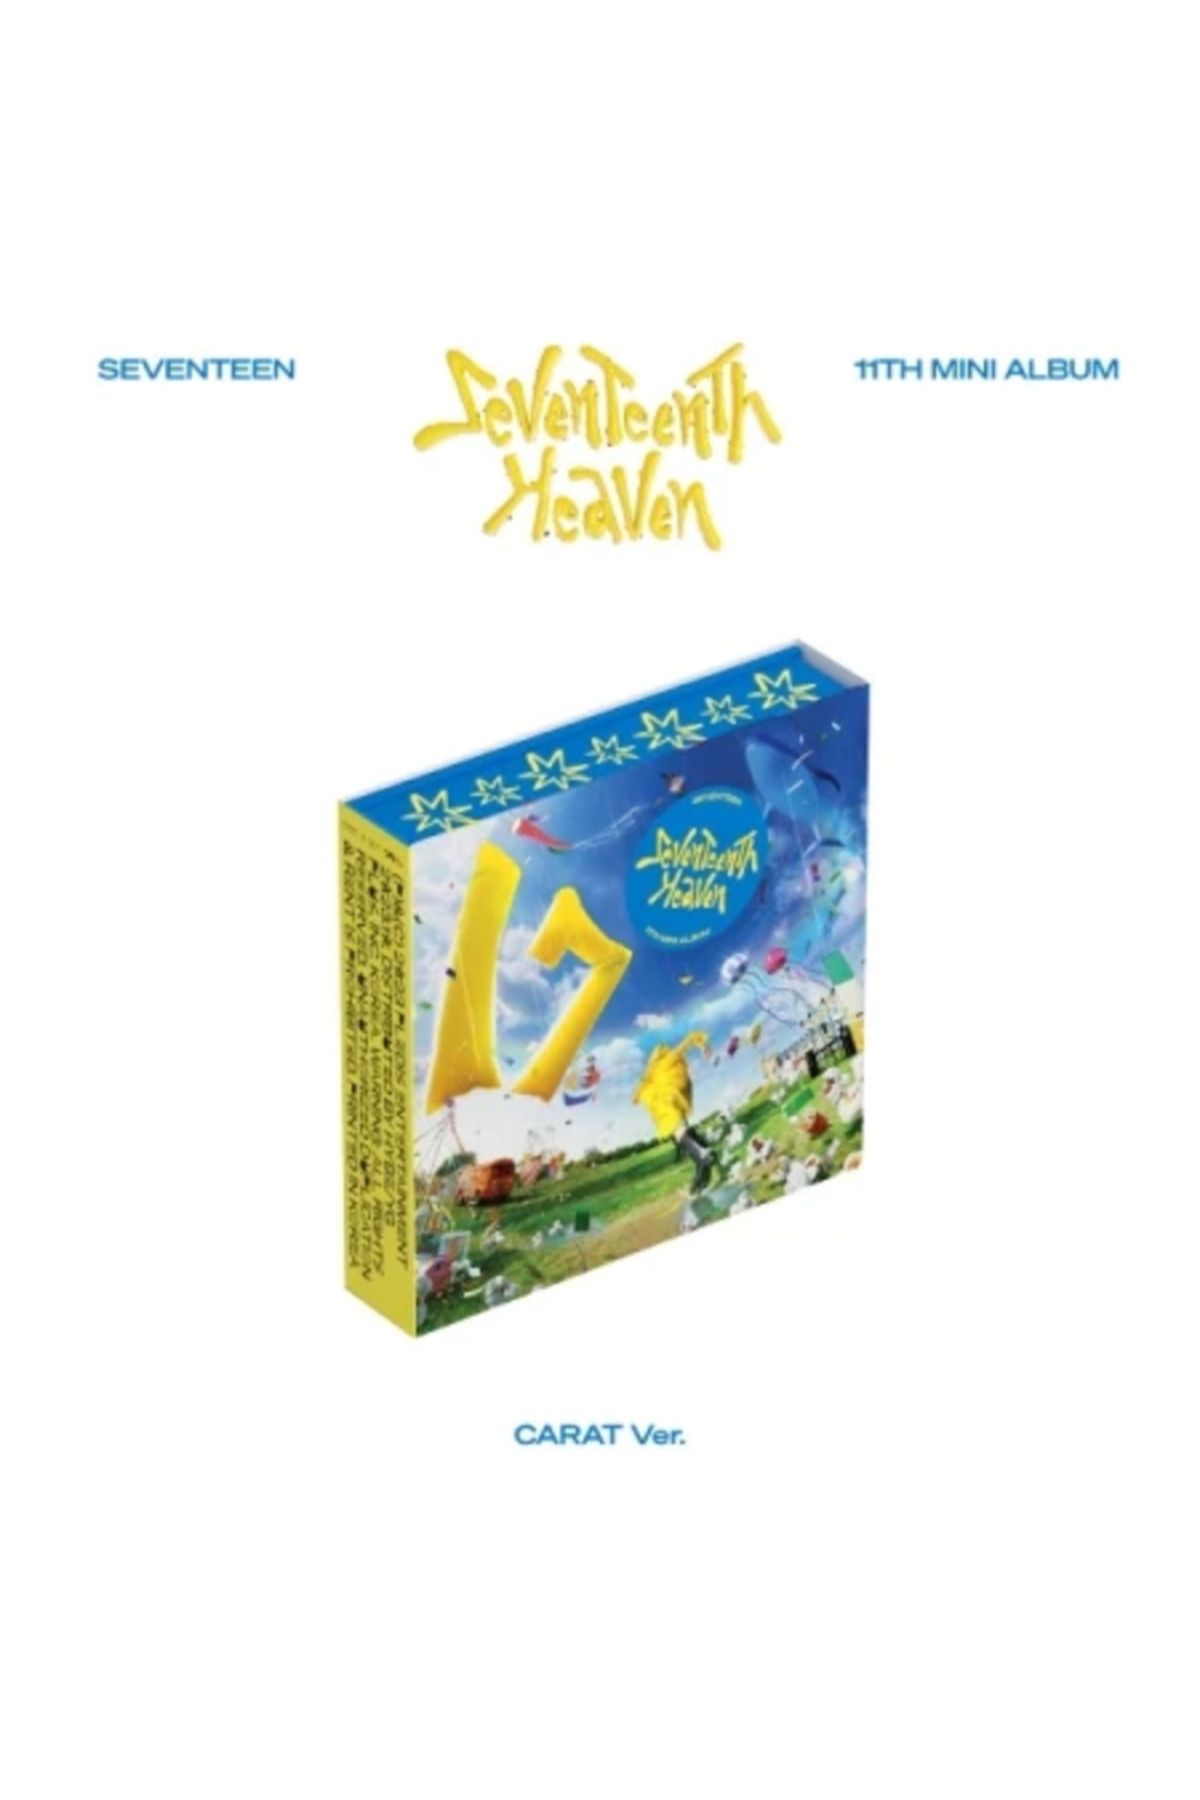 SEVENTEEN - 11th Mini Album SEVENTEENTh Heaven - CARAT Versiyon